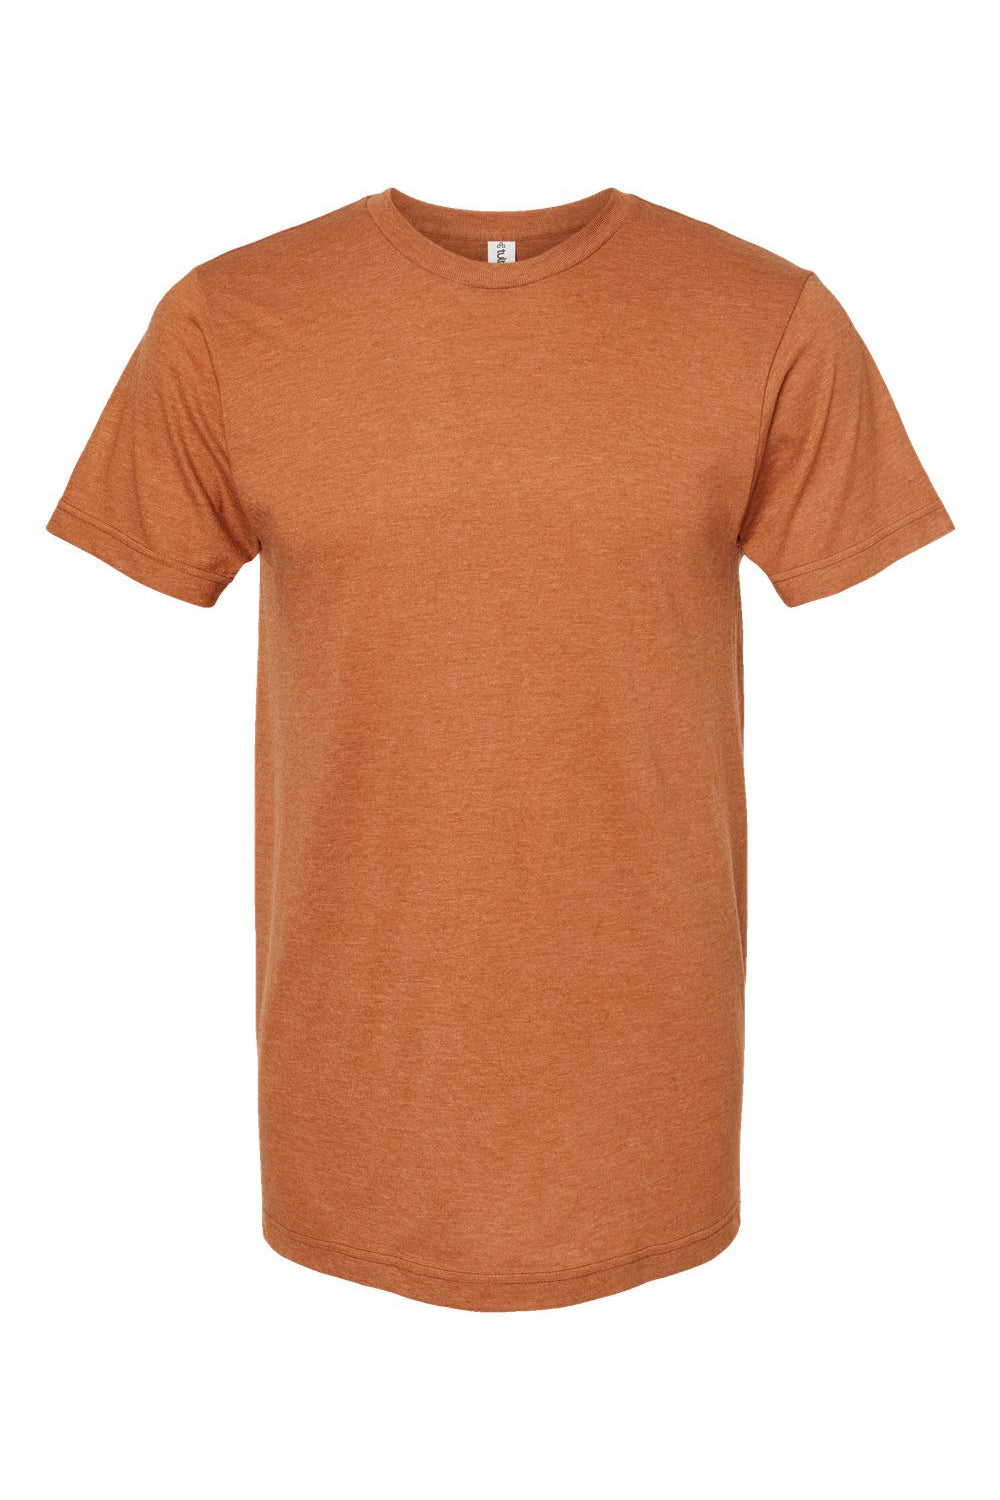 Tultex 202 Mens Fine Jersey Short Sleeve Crewneck T-Shirt Heather Rust Orange Flat Front